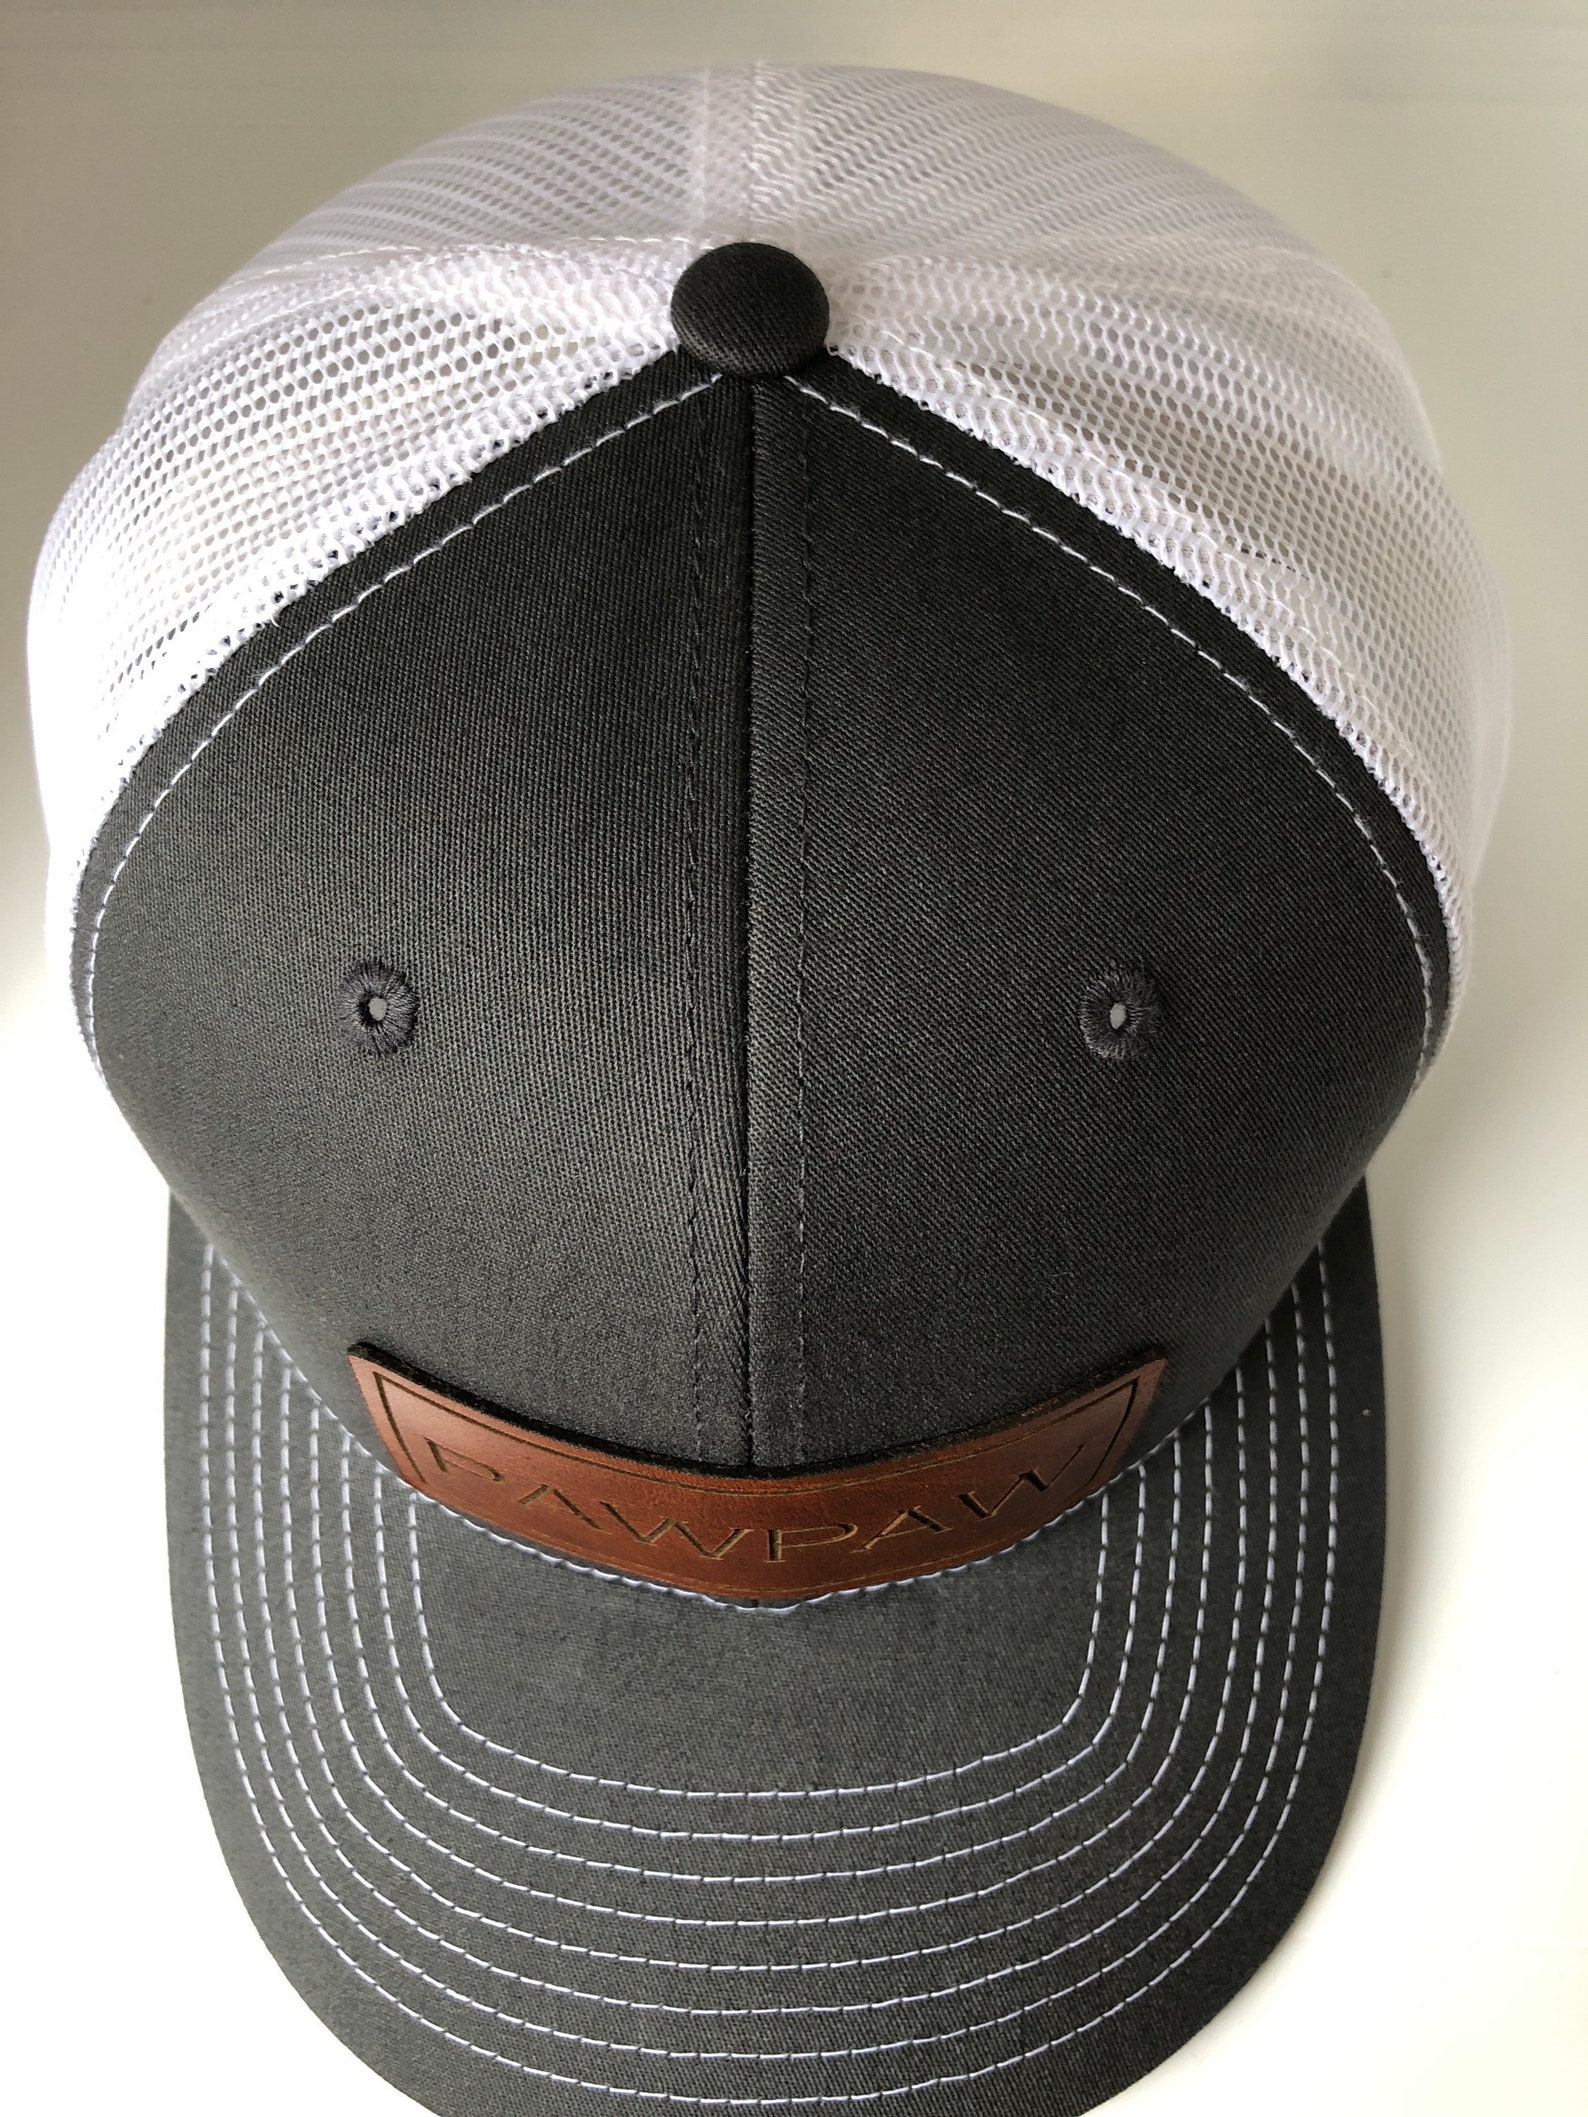 Pawpaw hat Richardson 112 SnapBack trucker hat with leather | Etsy